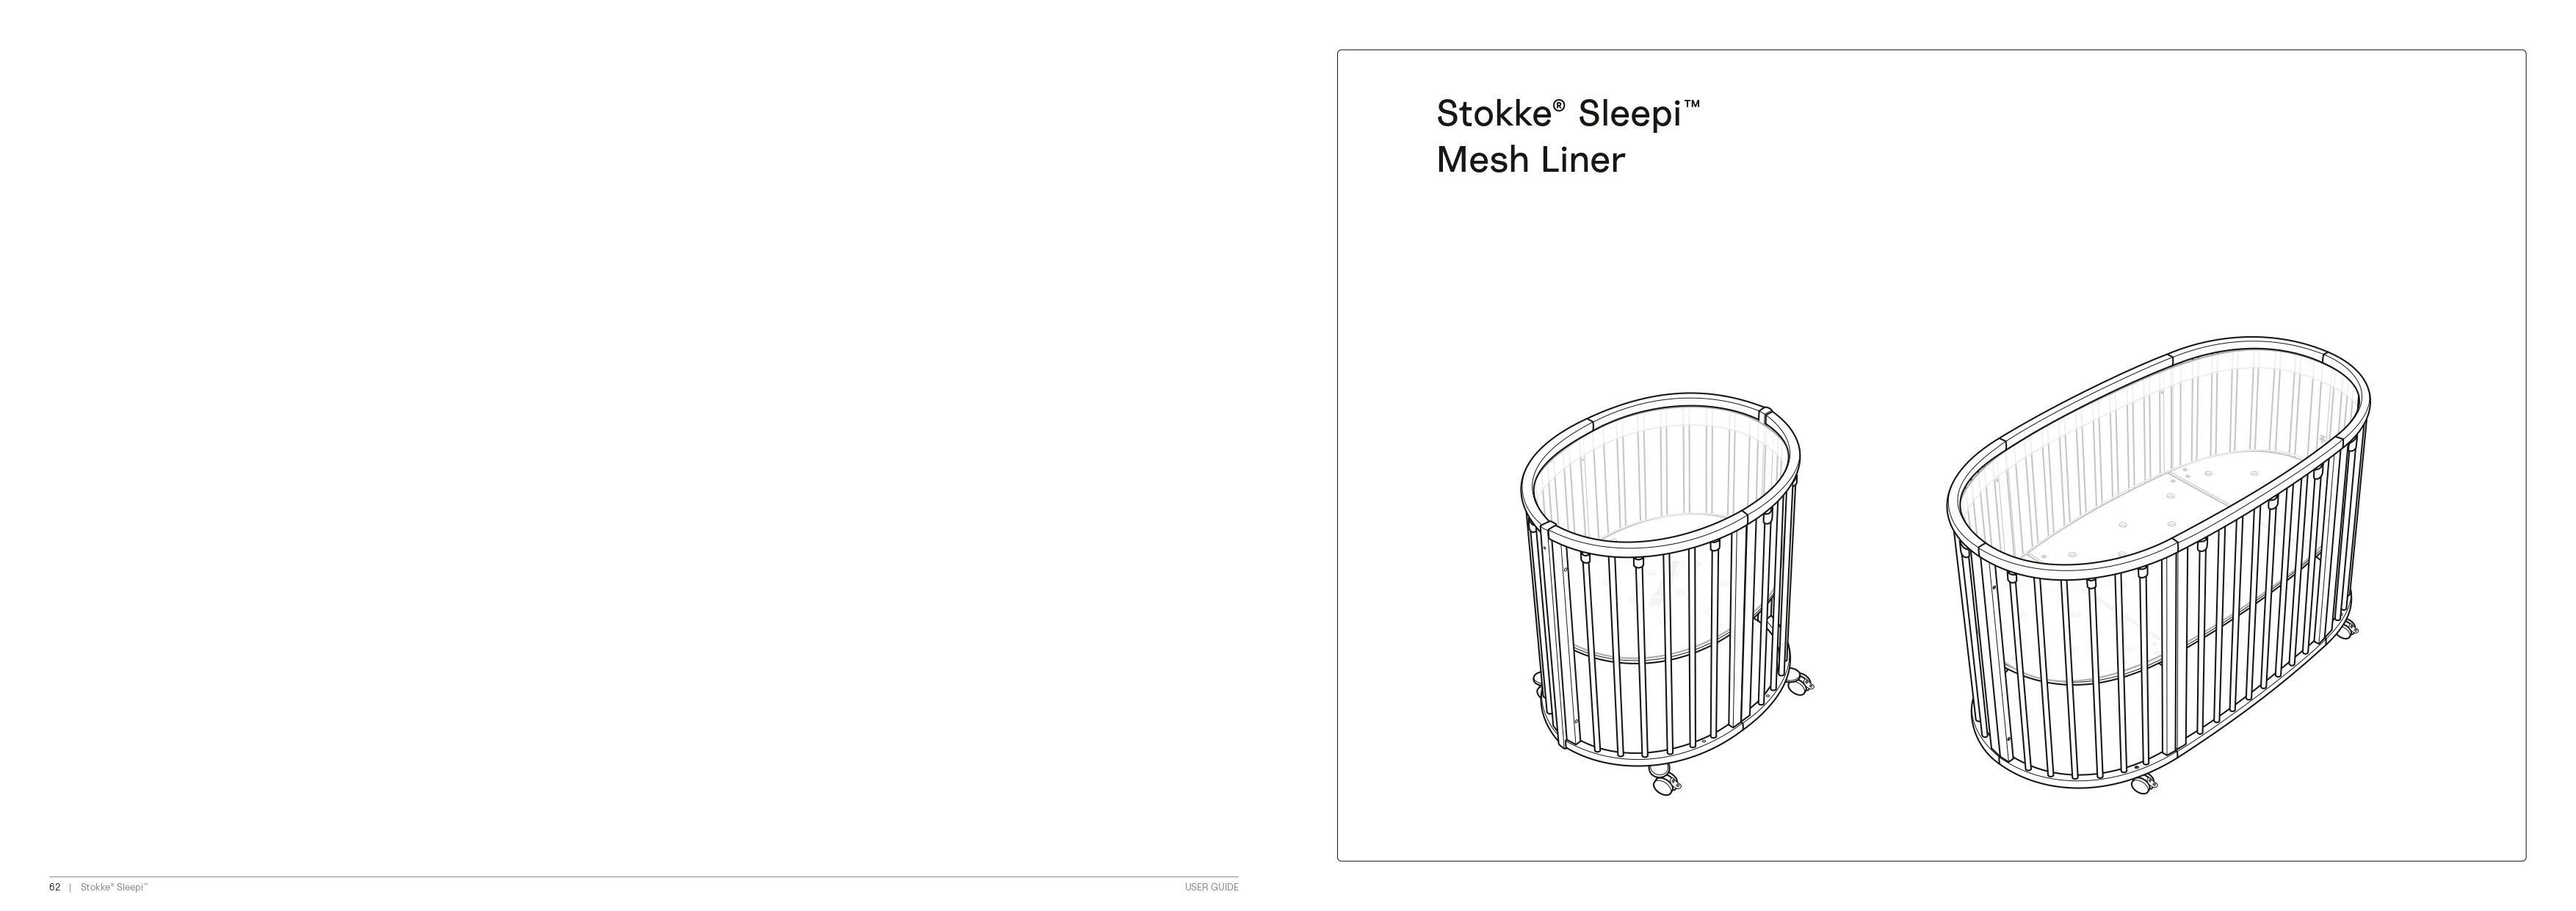 Stokke® Sleepi™ V3 Bed Mesh Liner - Product Use/Installation Instructi